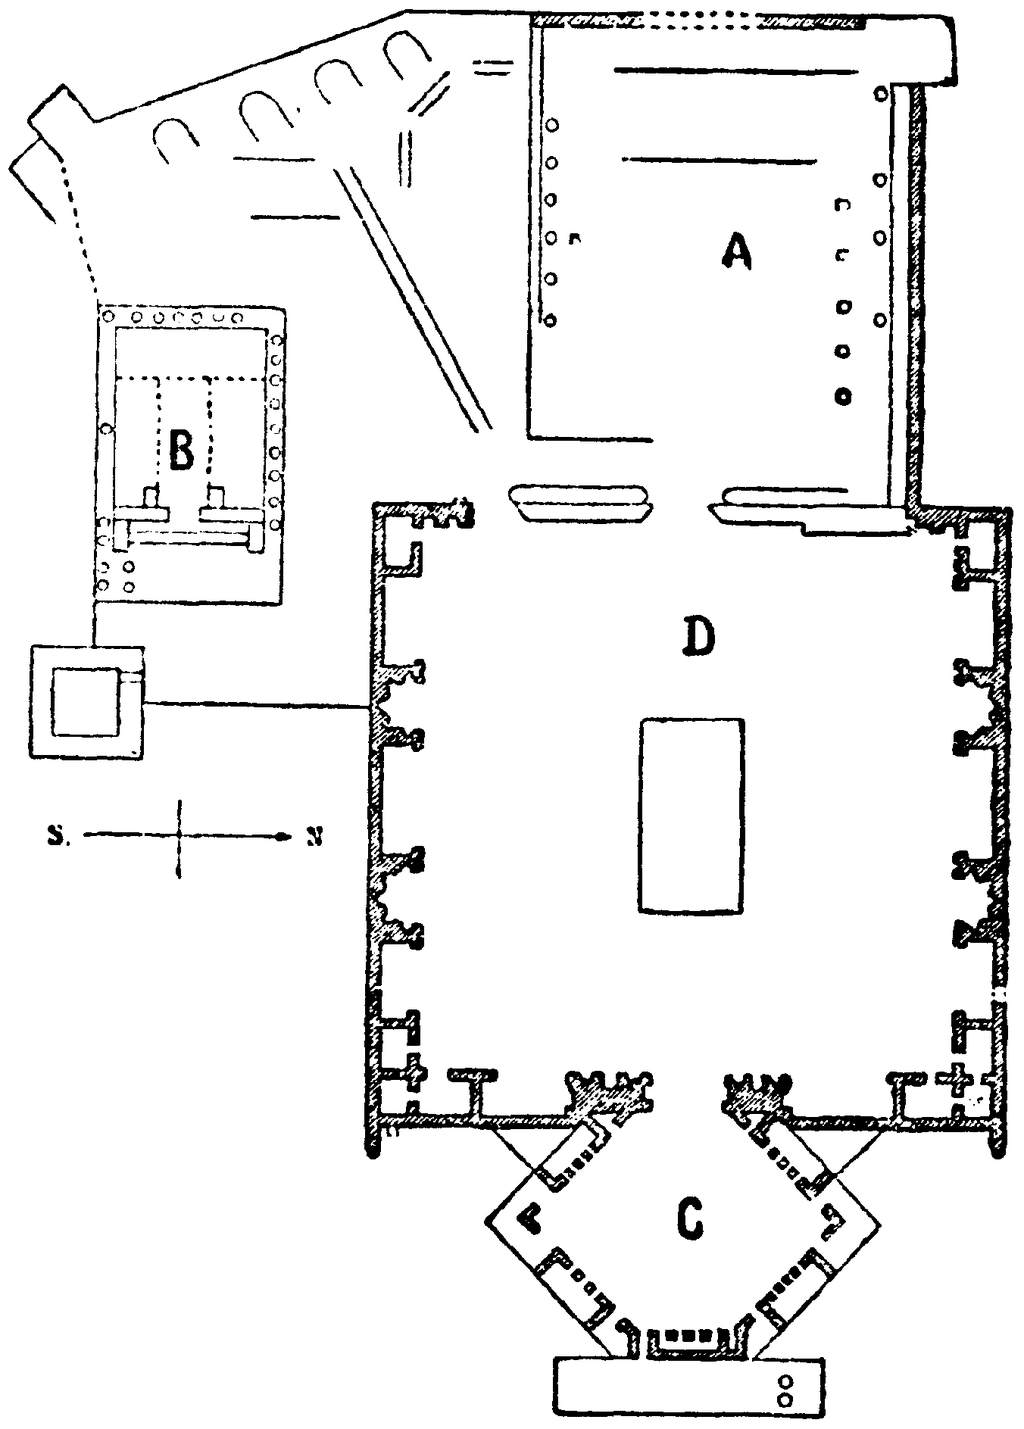 plano ruinas baalbek